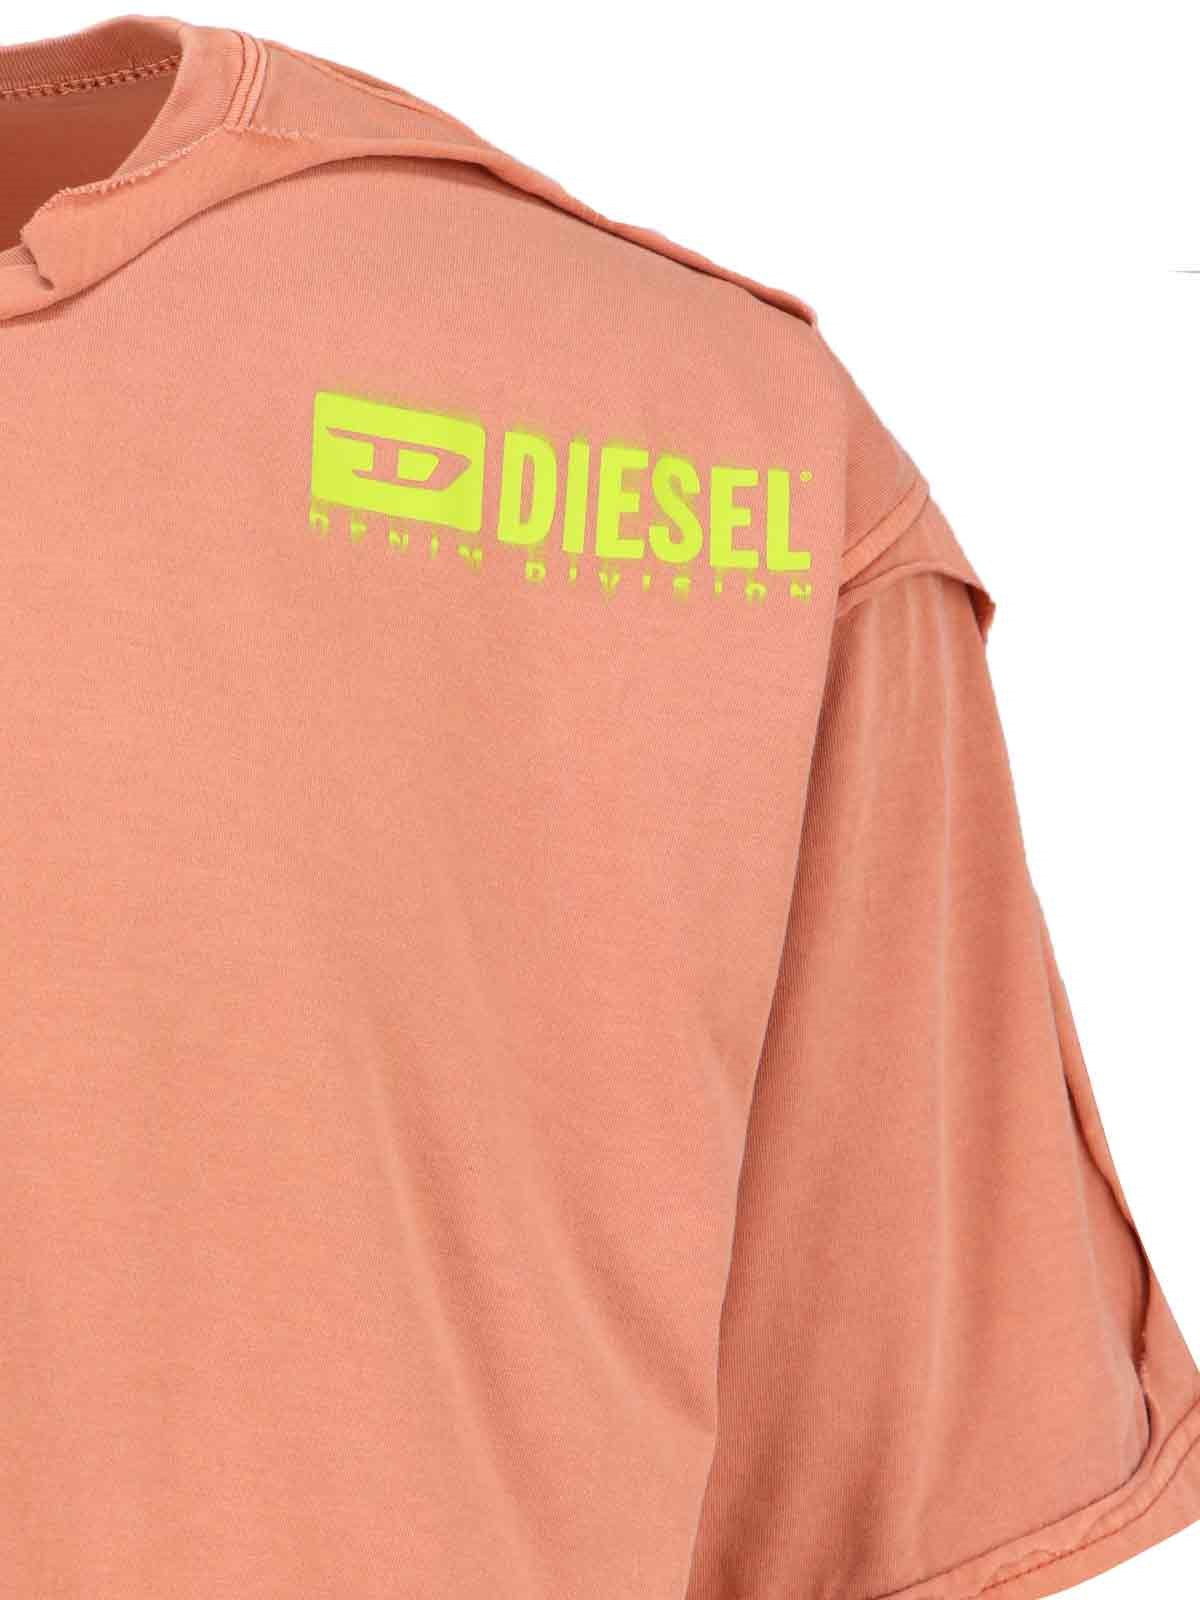 Diesel T-Shirt "t-box-dbl"-t-shirt-Diesel-T-shirt "t-box-dbl" Diesel, in cotone arancione, girocollo, maniche corte, dettagli destroyed, stampa logo verde fronte, orlo dritto.-Dresso